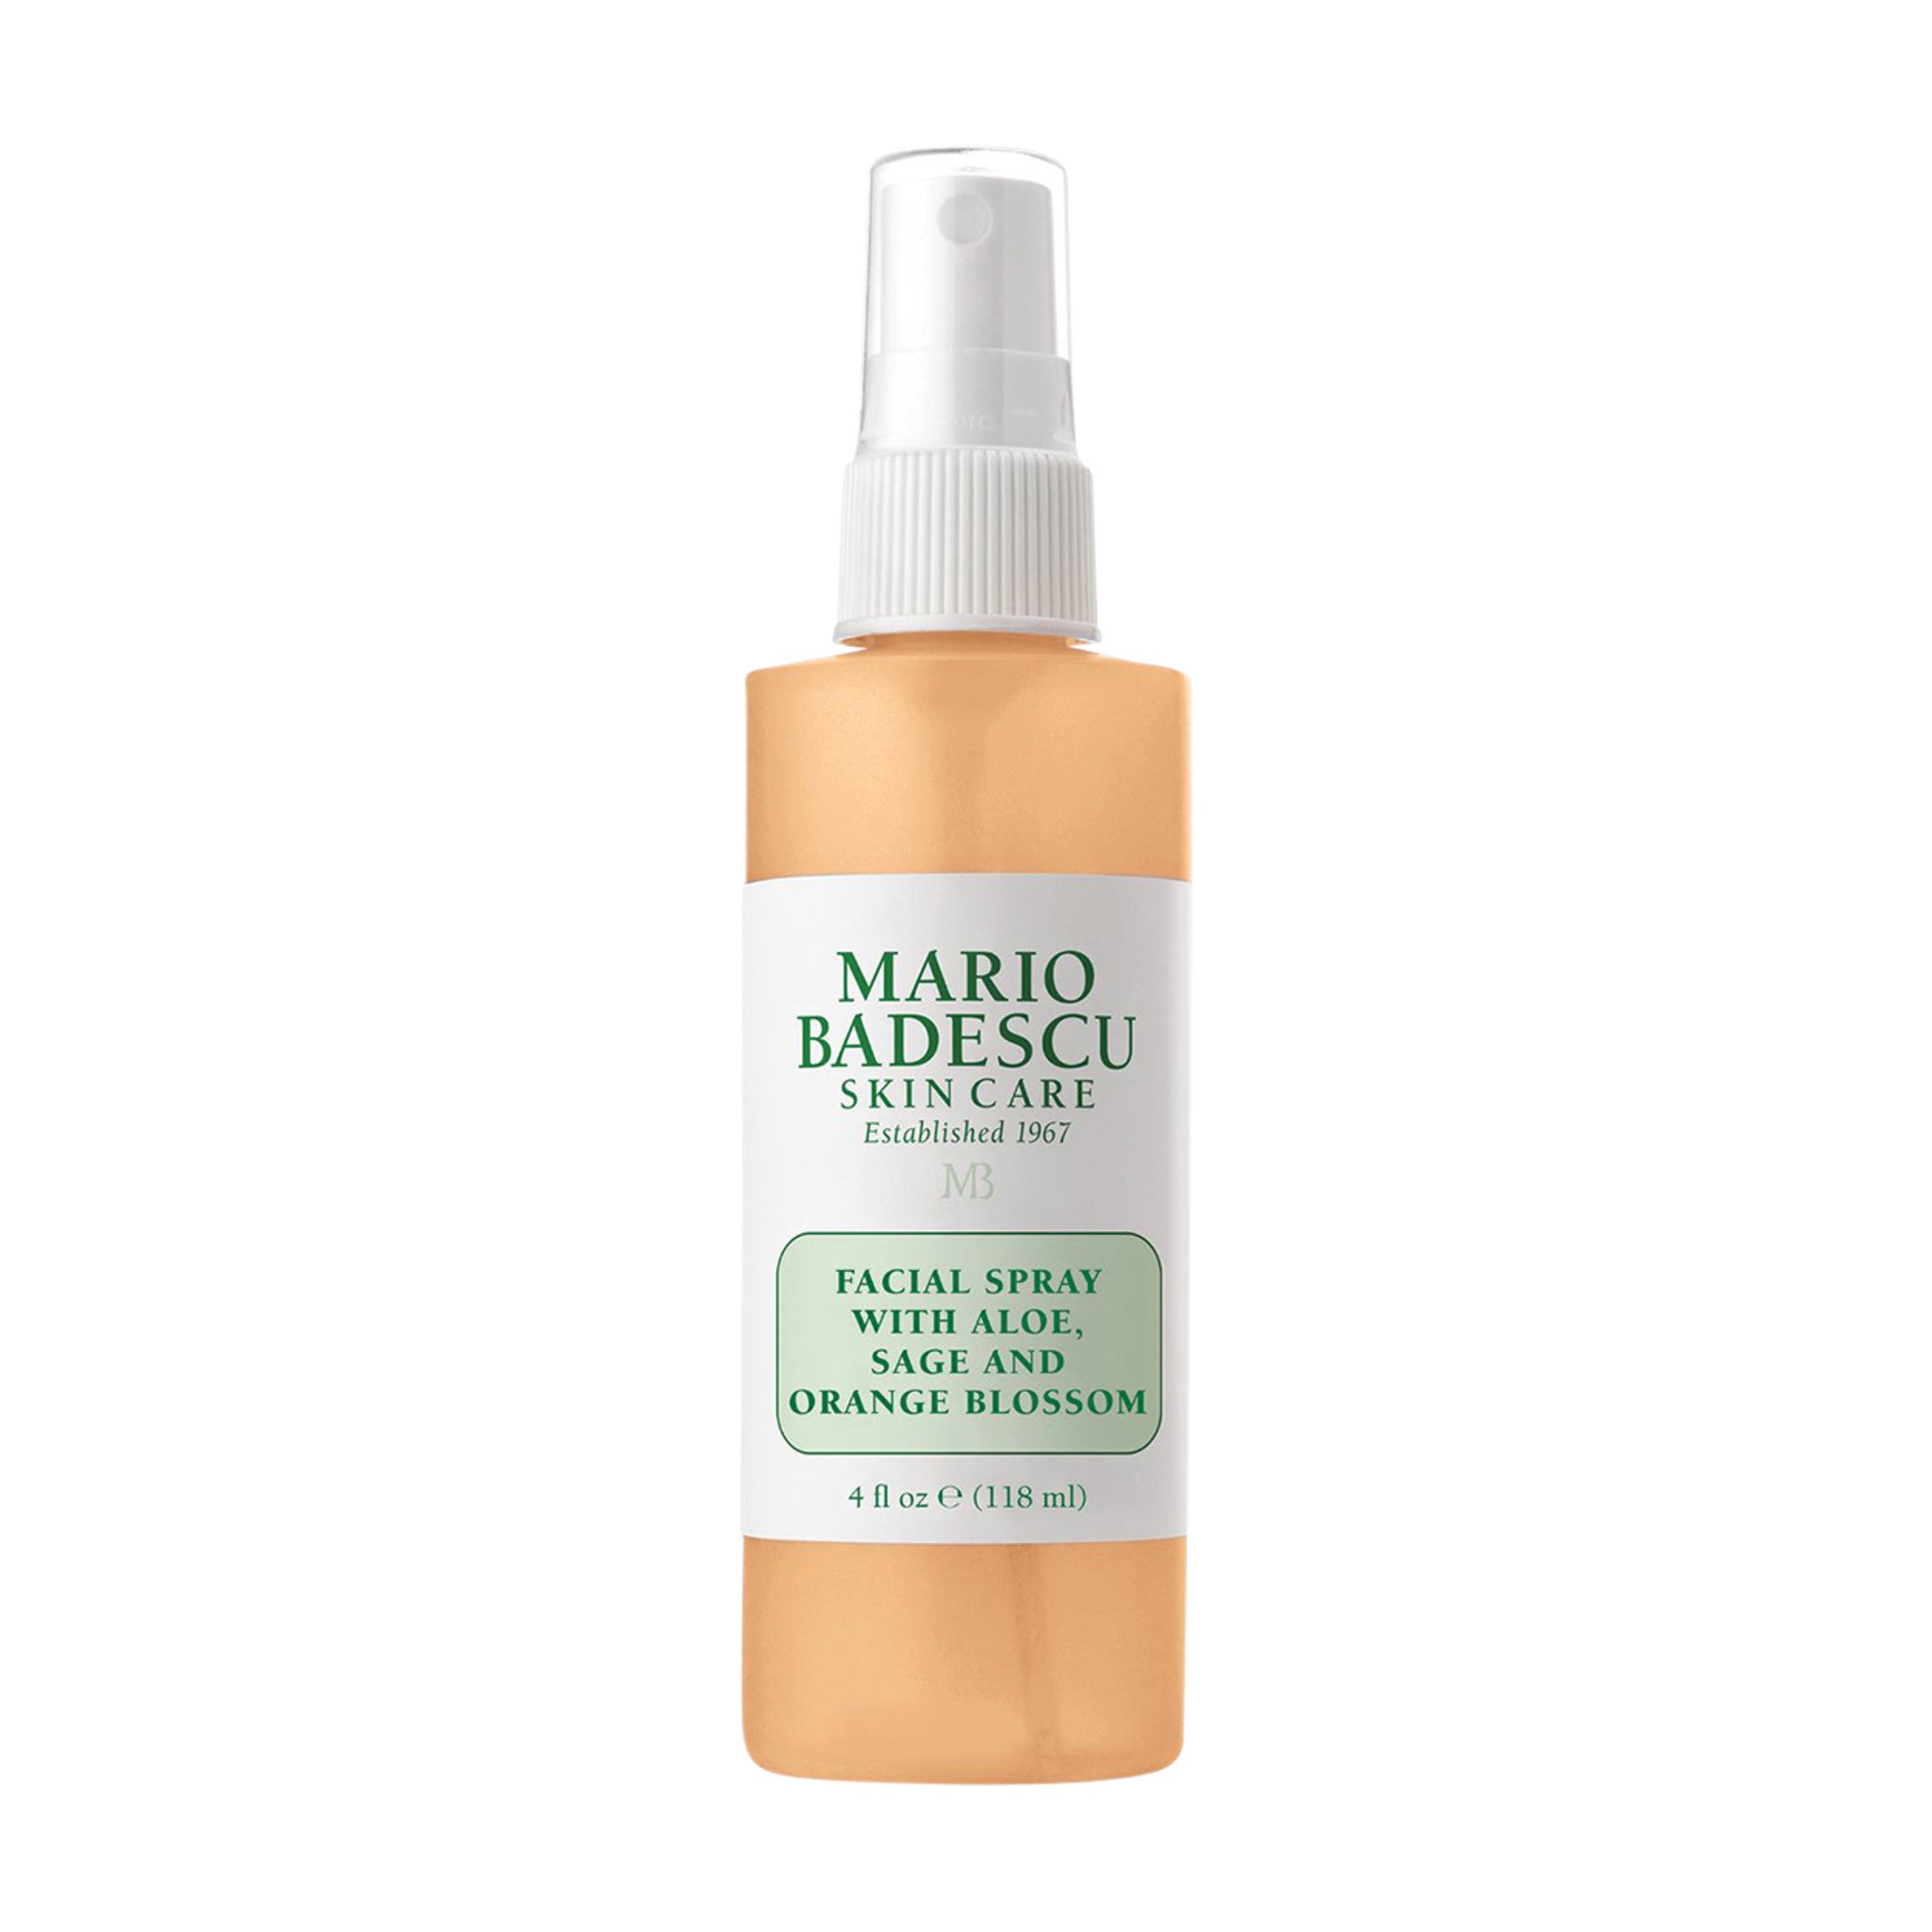 Mario Badescu Facial Spray With Aloe, Sage and Orange Blossom Size variant: 4oz main image.